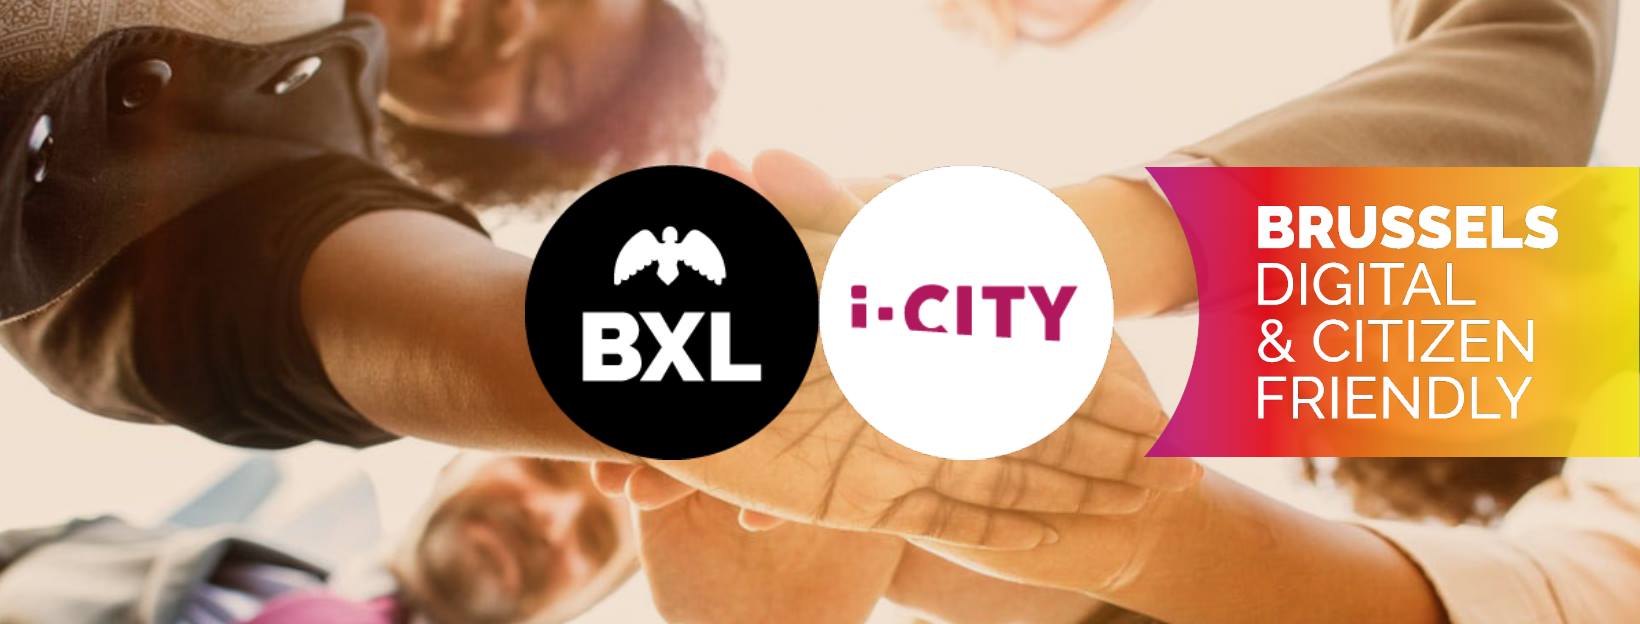 i-CITY - Brussels digital & citizen friendly